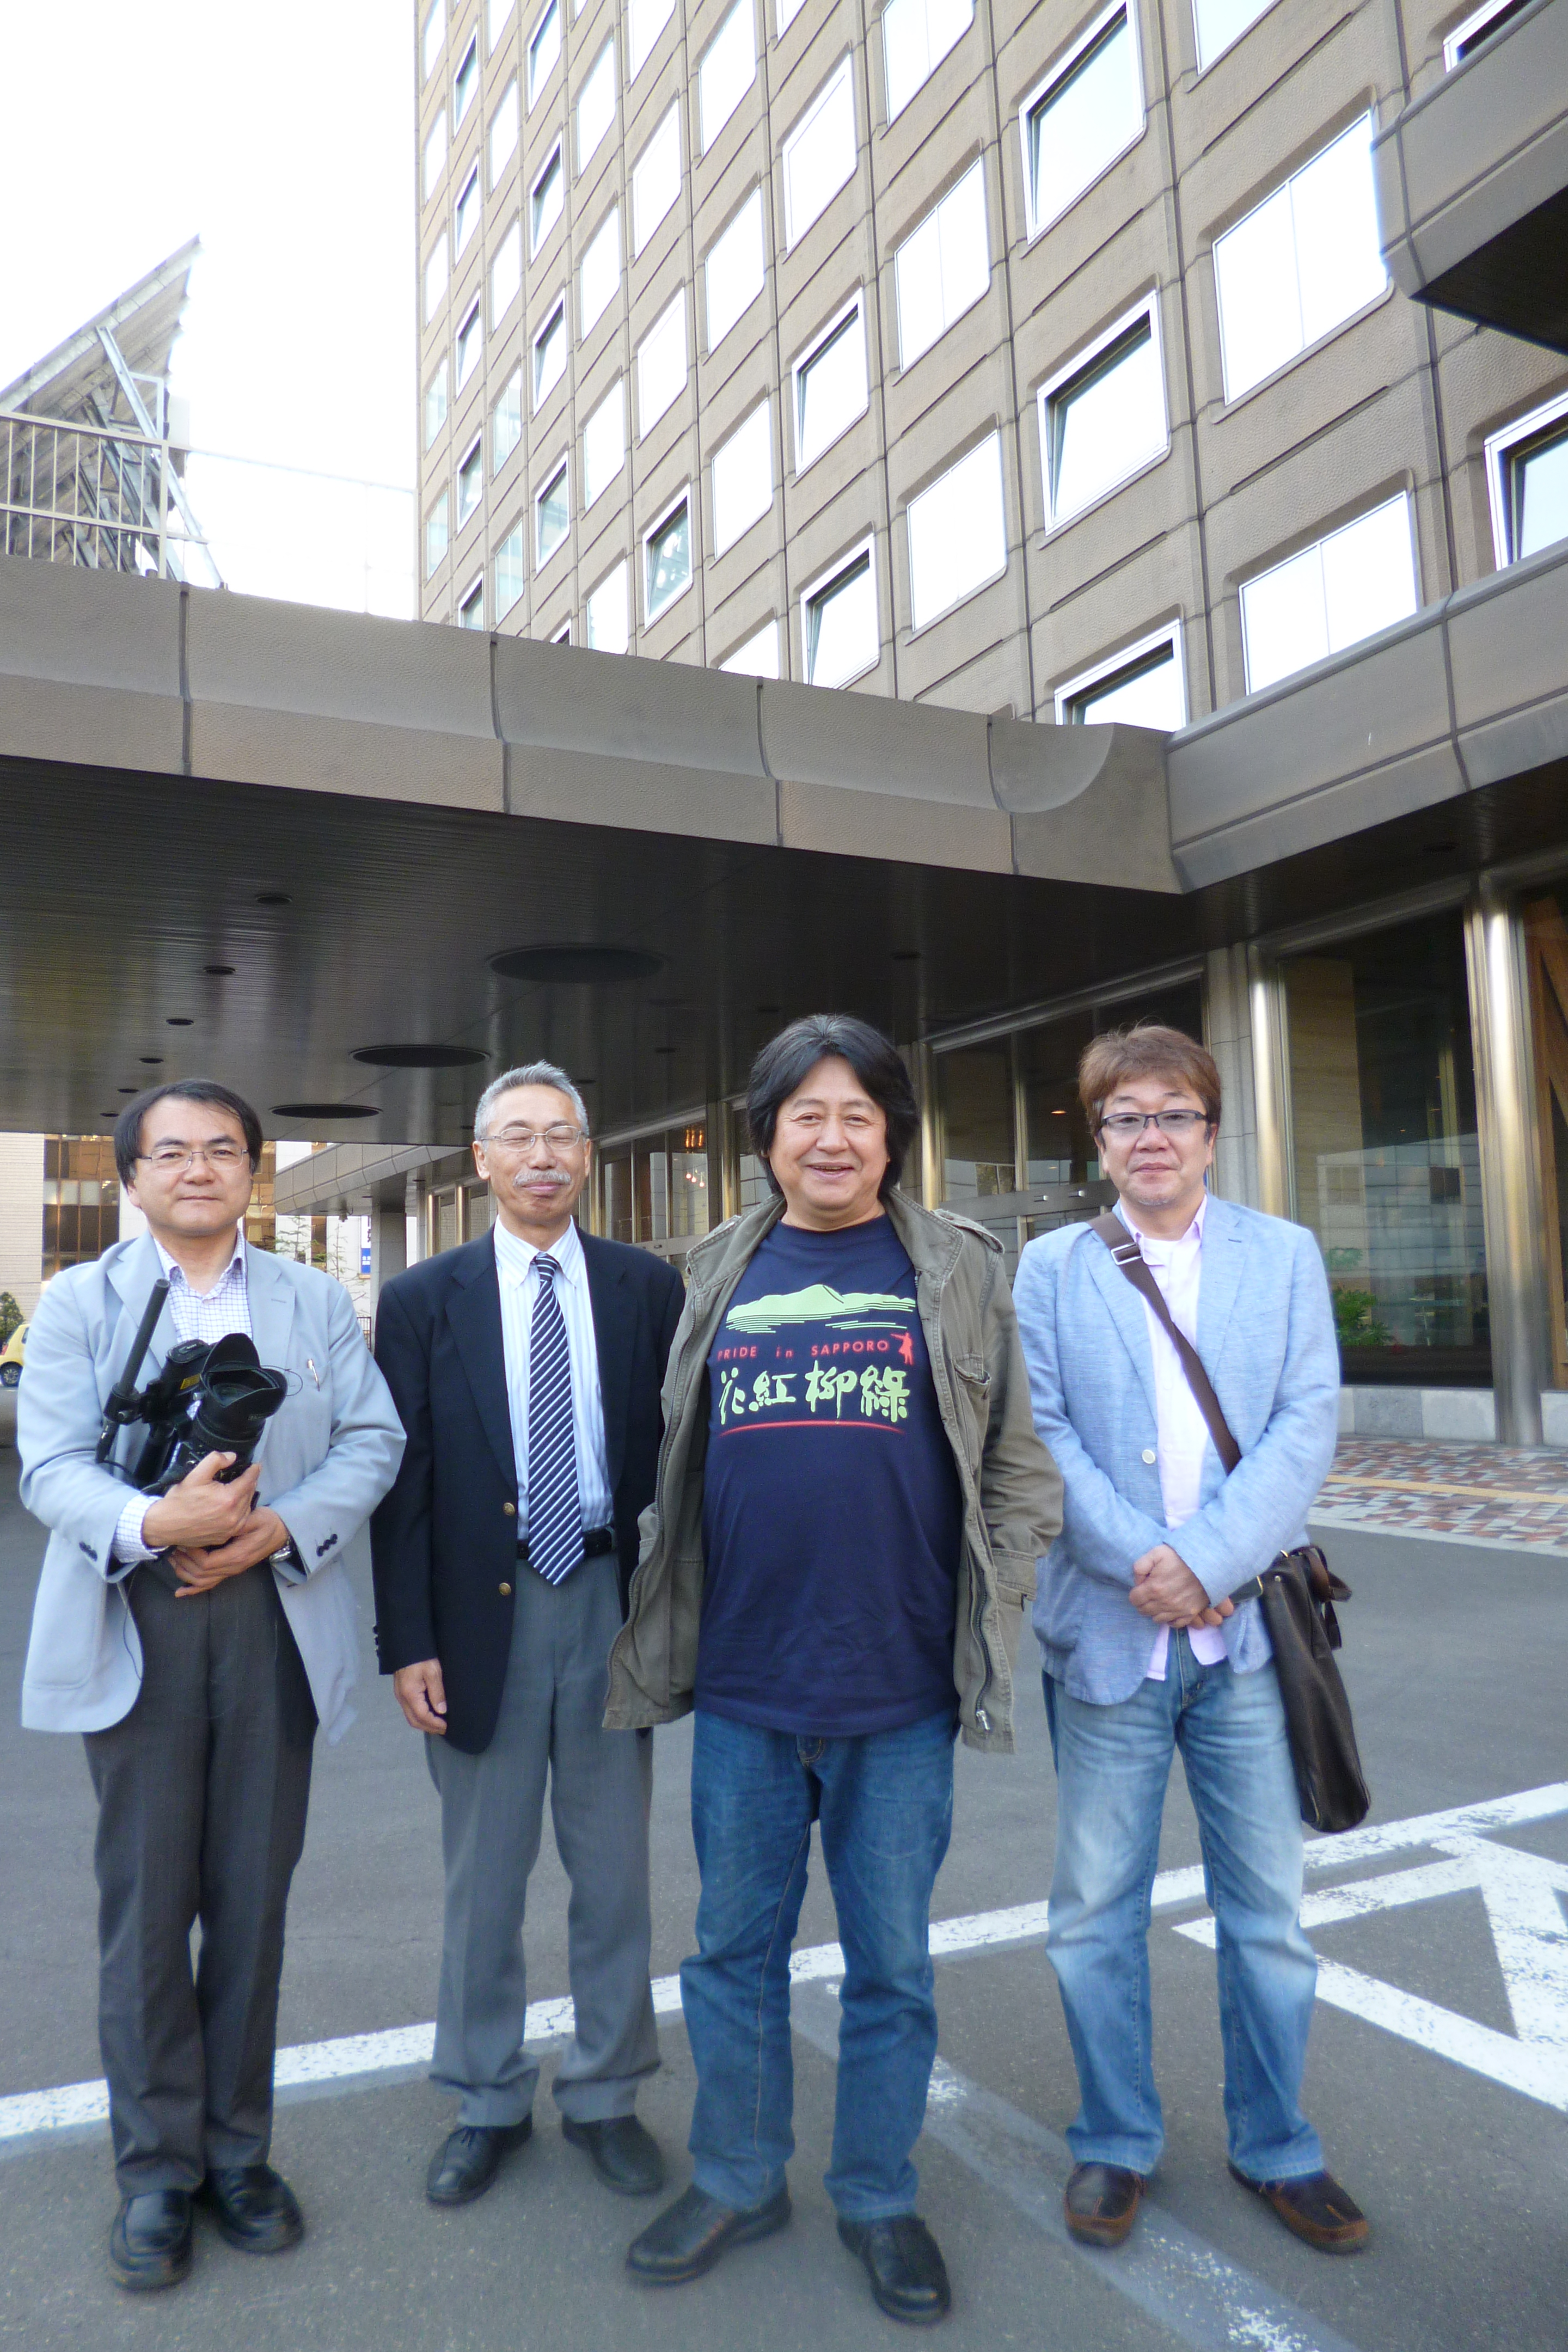 市長と面会後、札幌市役所前で